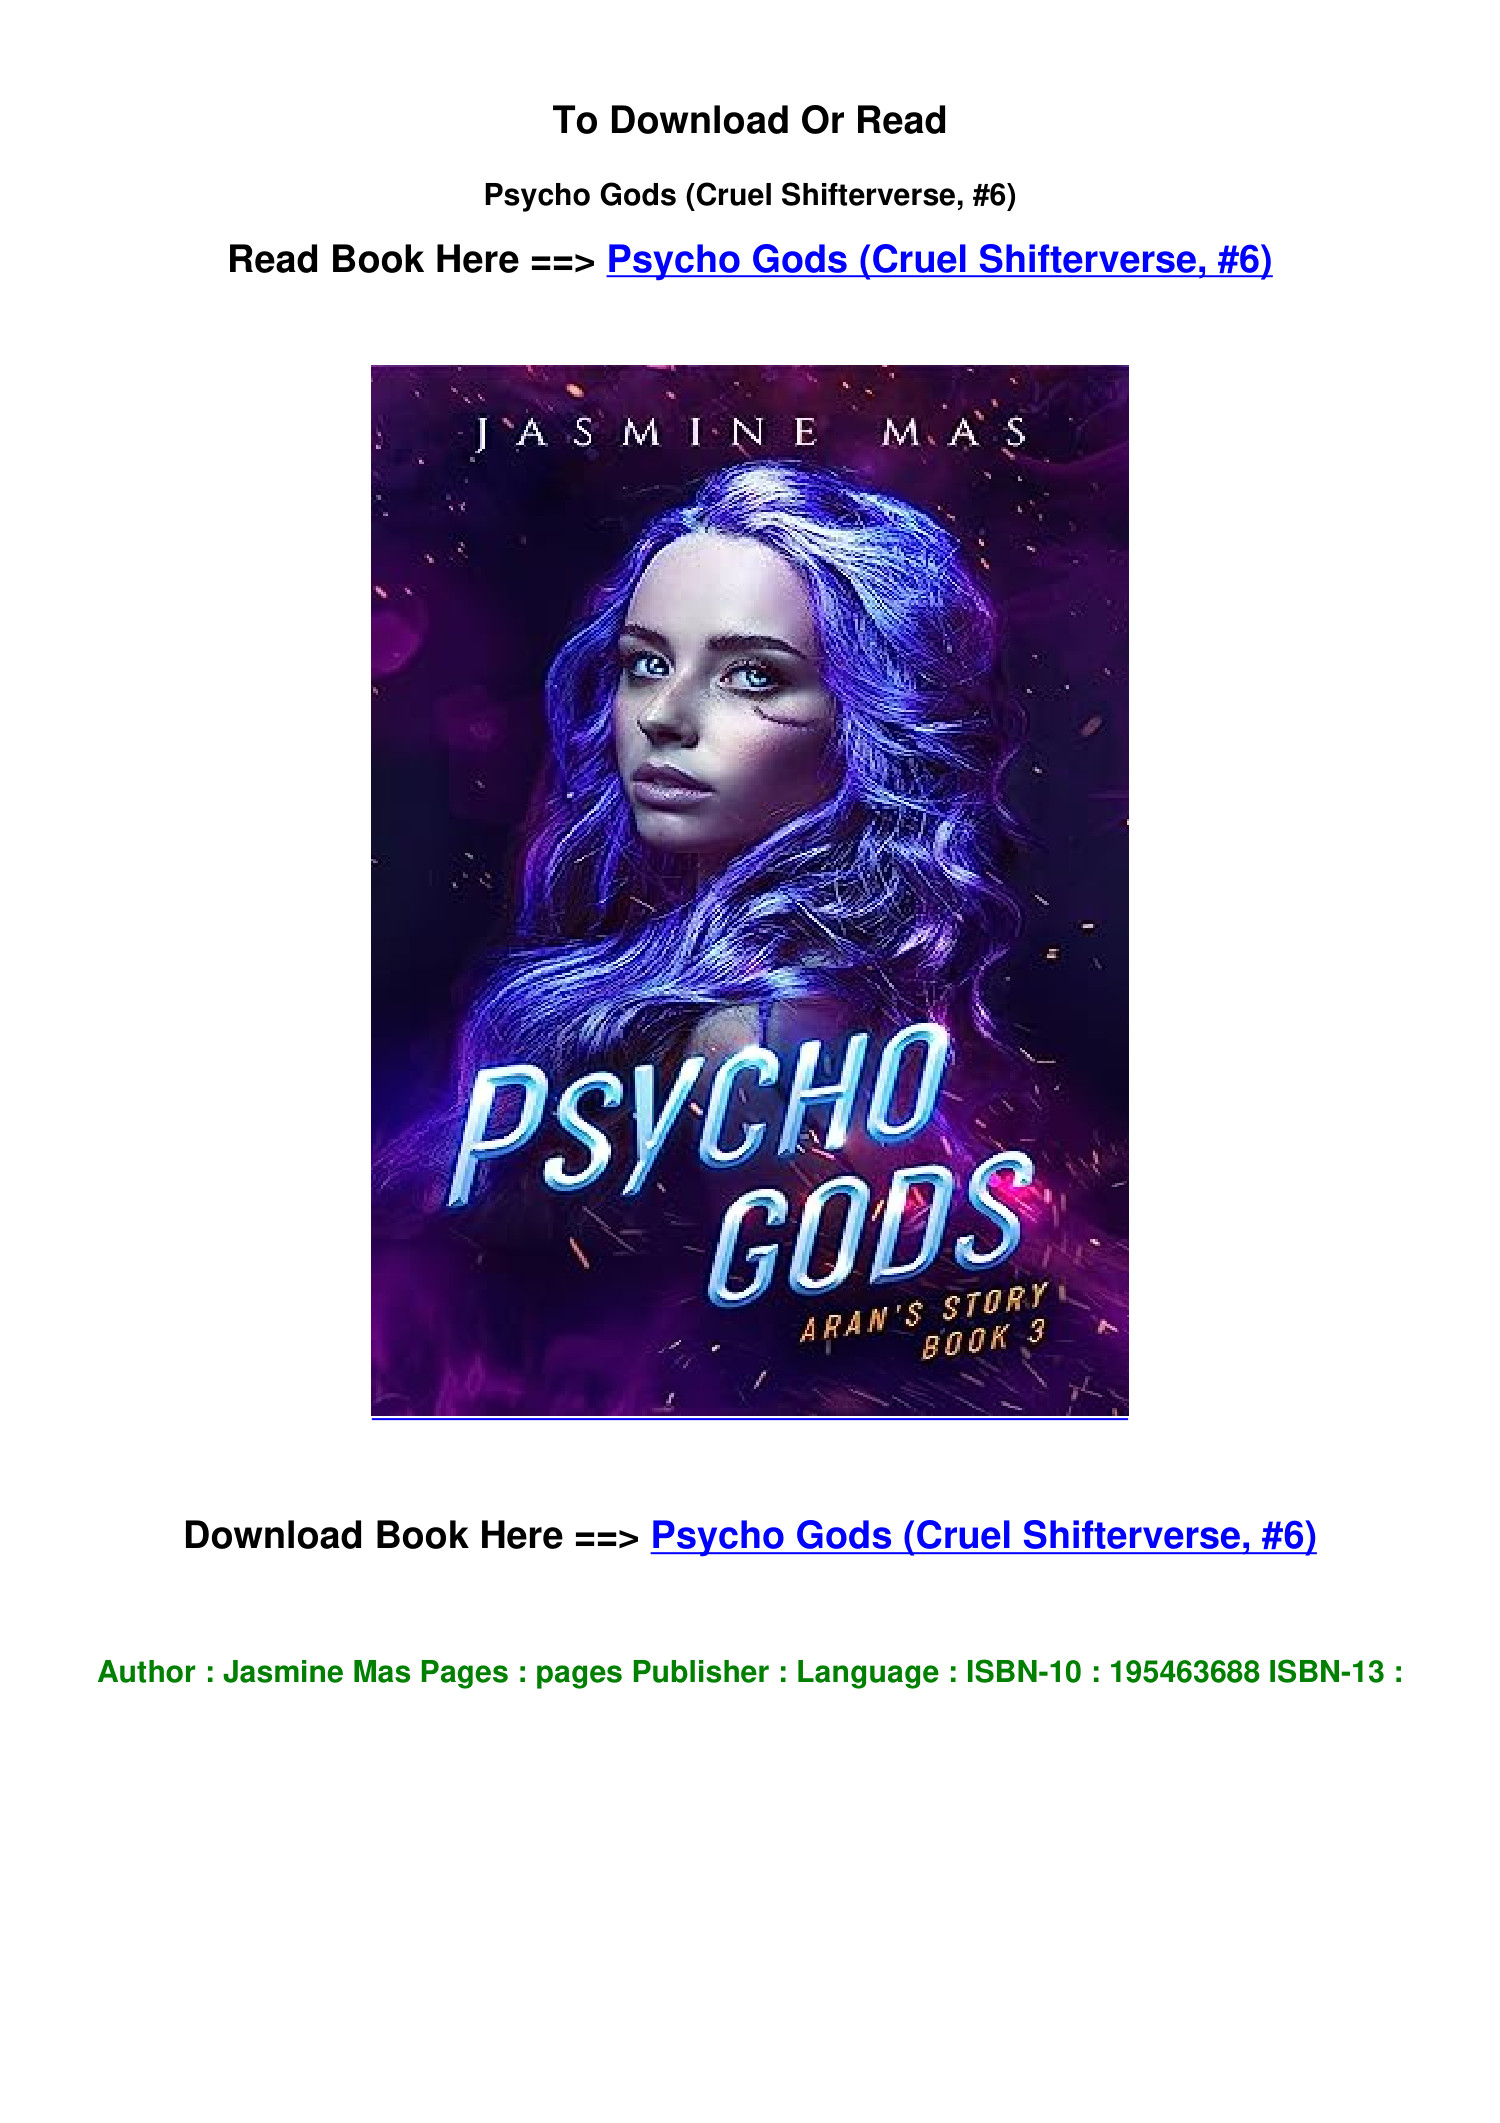 Psycho Gods (Cruel Shifterverse)